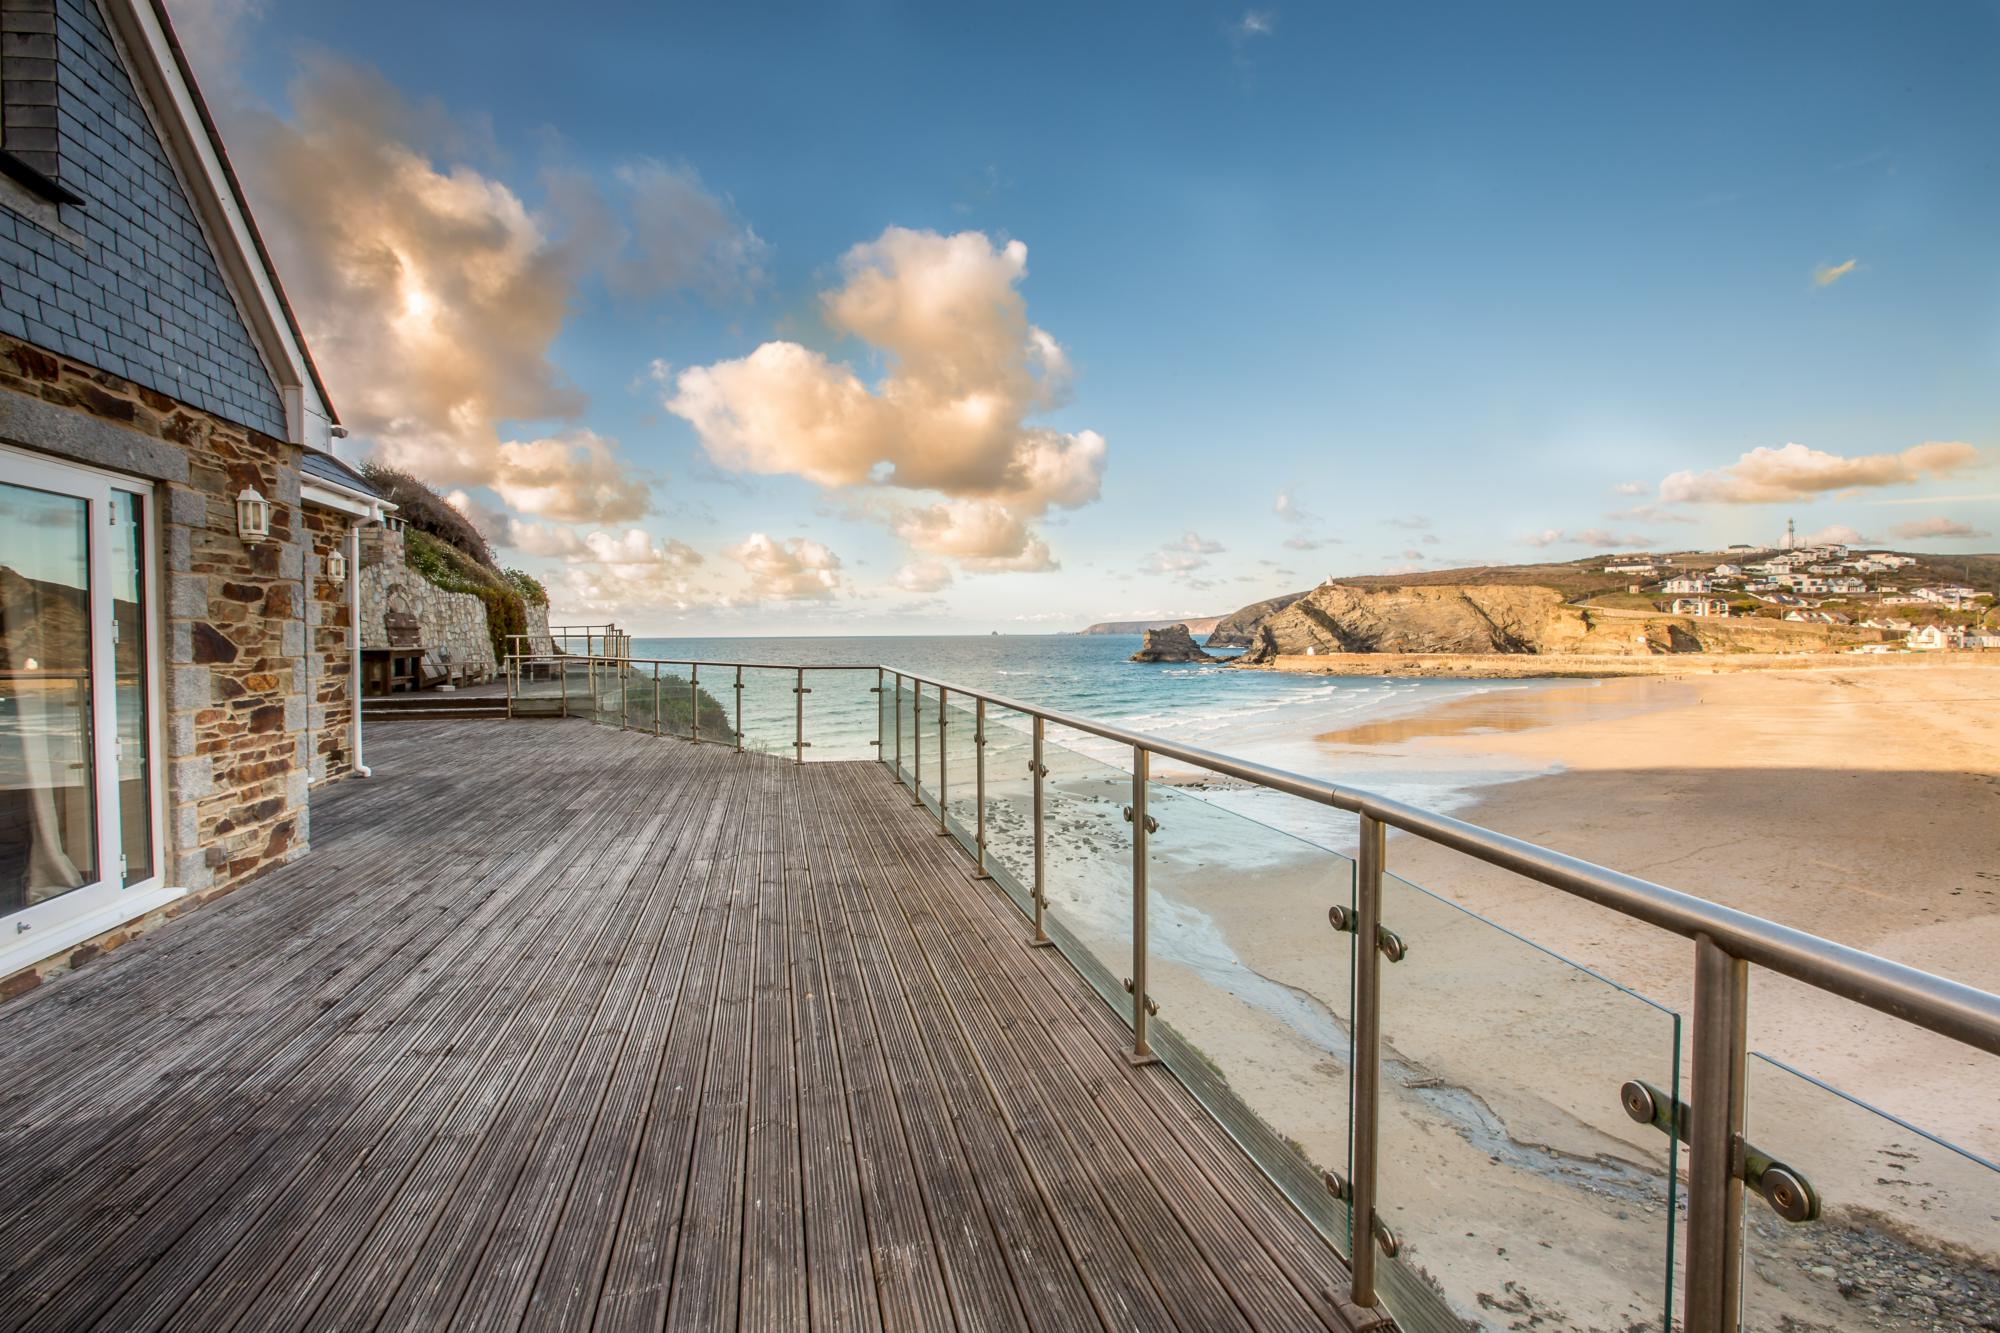 Babosa de mar Descuido aprendiz Seaside Cottage Rentals, Luxury Beach House Rent UK I Cool Places